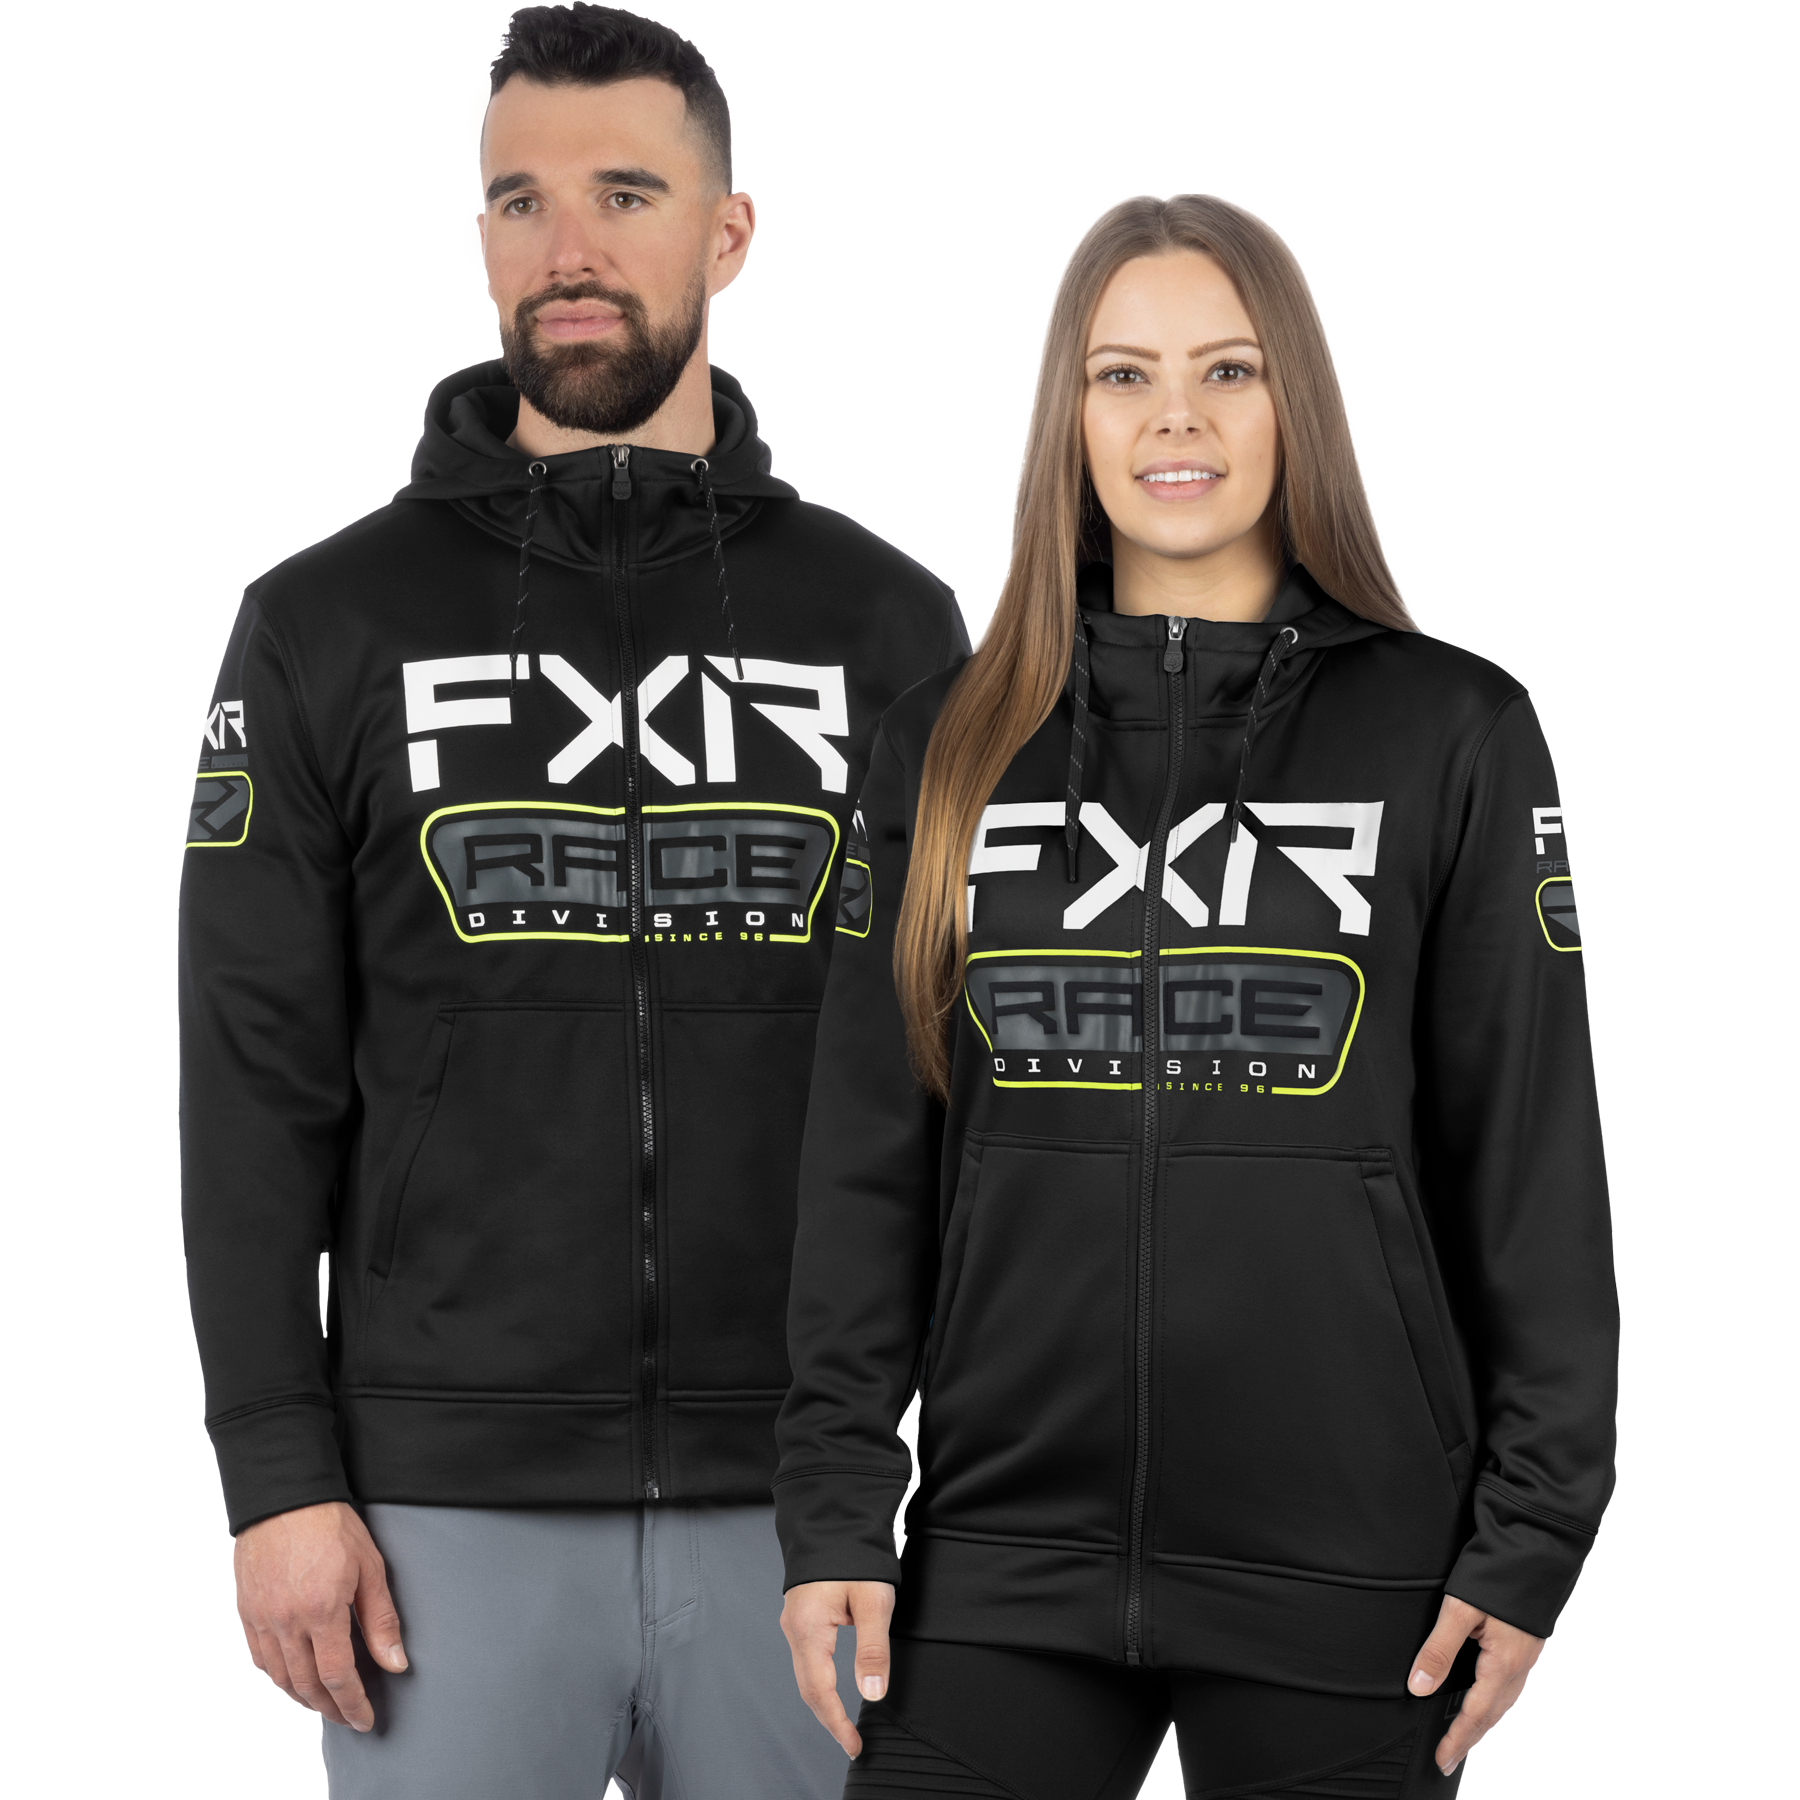 fxr racing hoodies adult unisex race division tech hoodies - casual